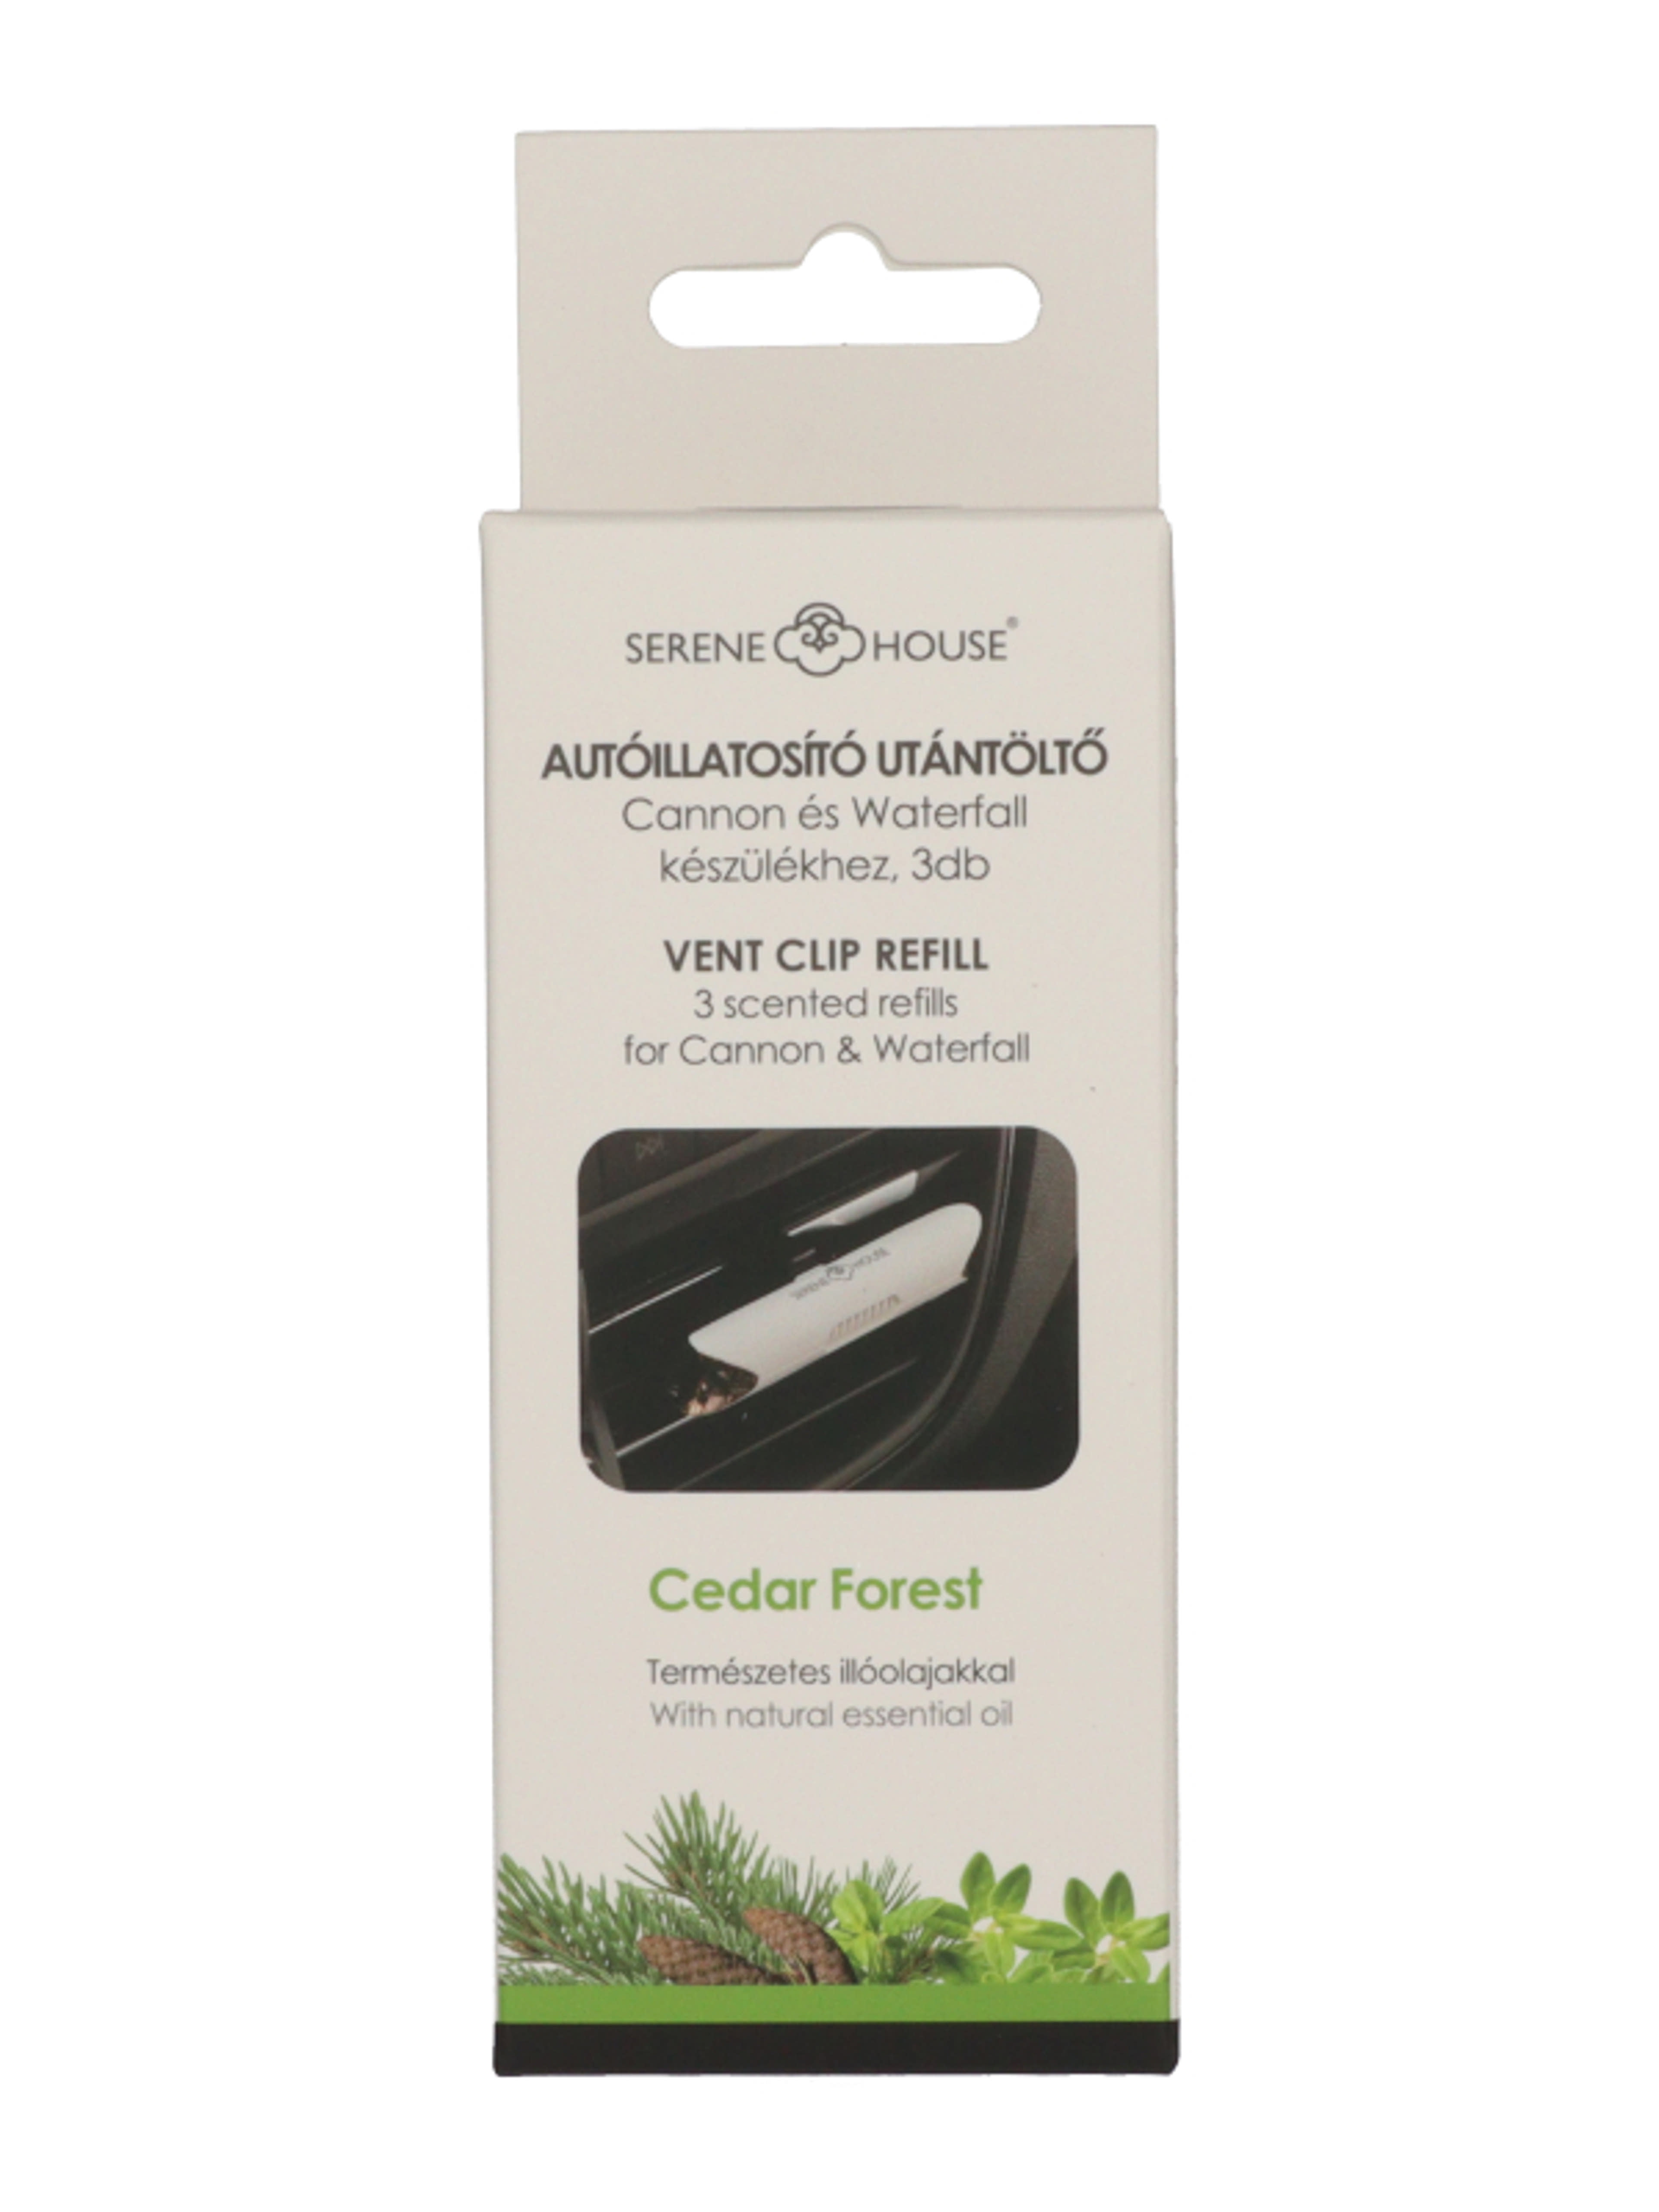 Serene House Canon autós illatosító utántöltő /Cedar Forest - 1 db